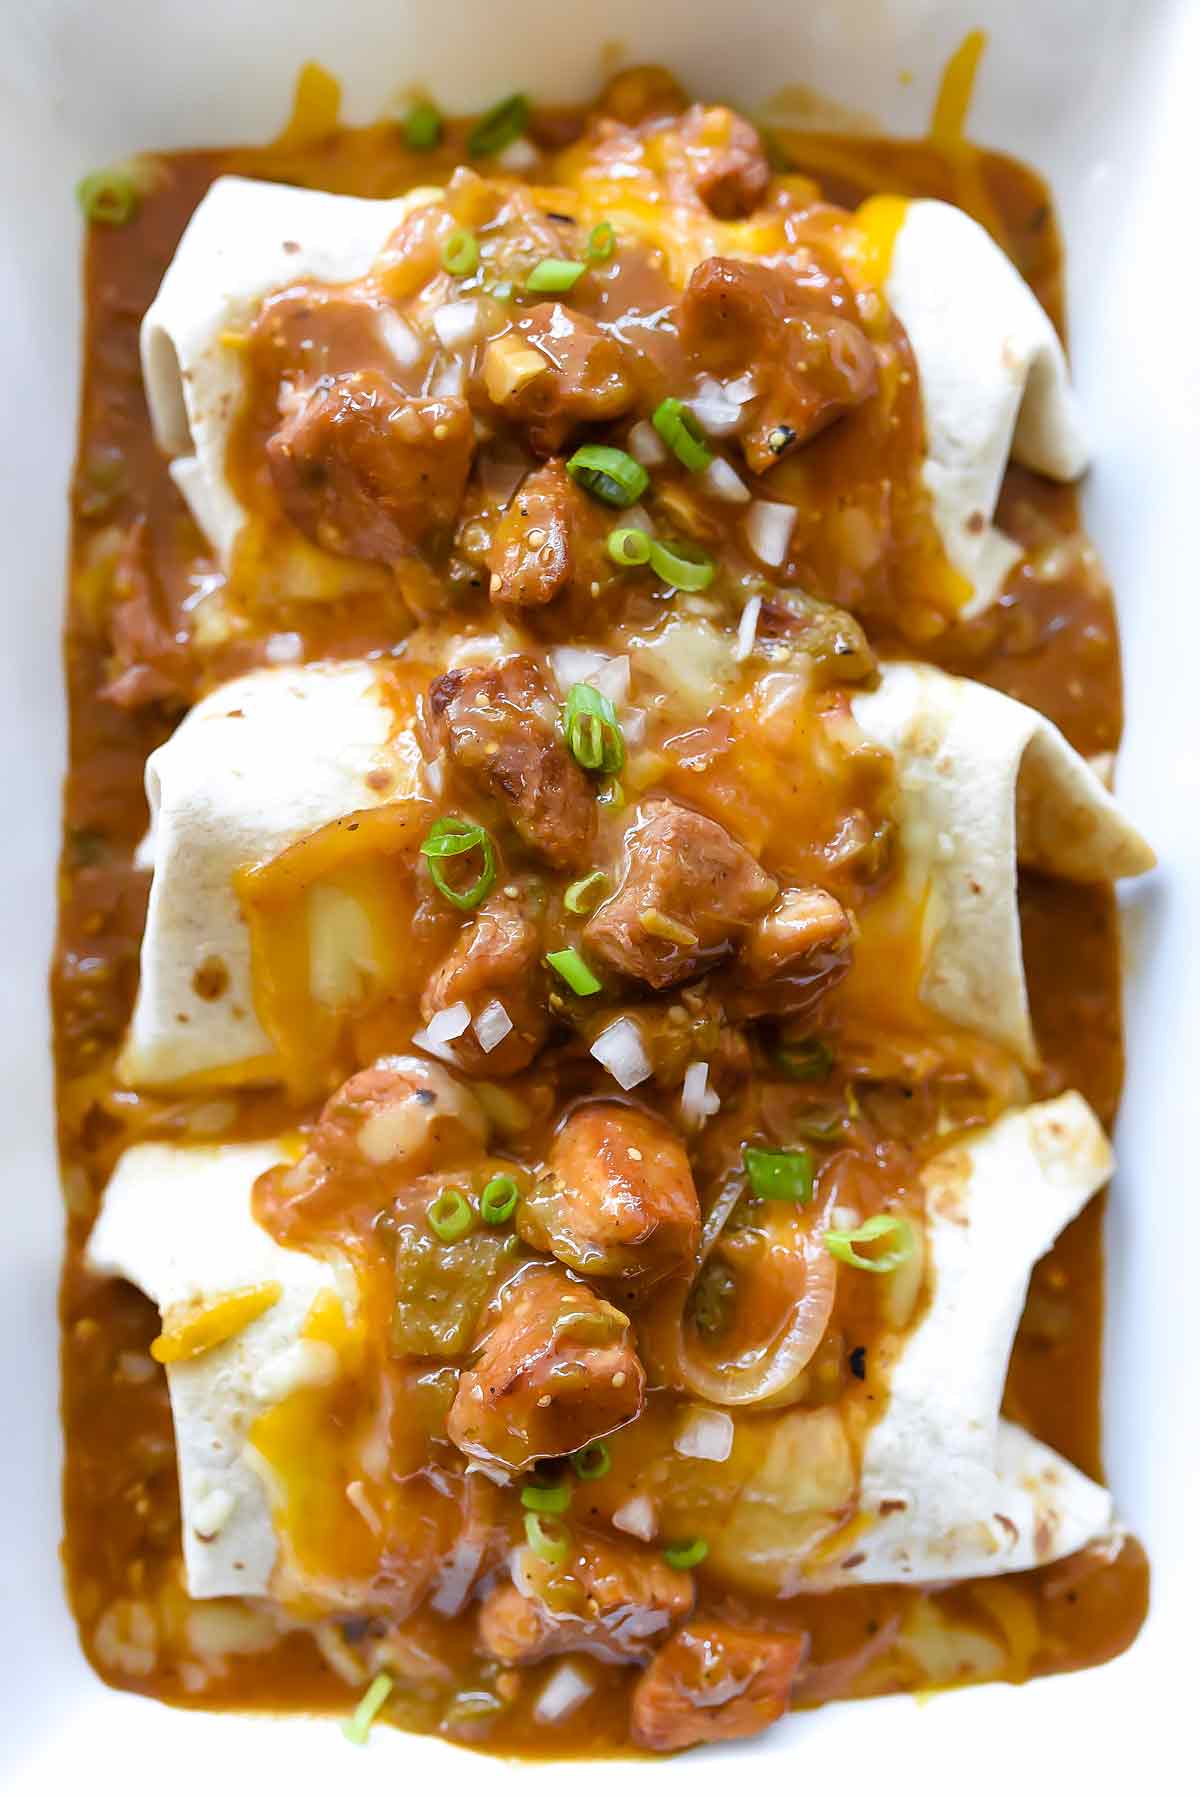 Burritos au chili vert maison, rapides et faciles | #chile #verde #porc #rapide #facile #recette #dîner #burritos foodiecrush.com